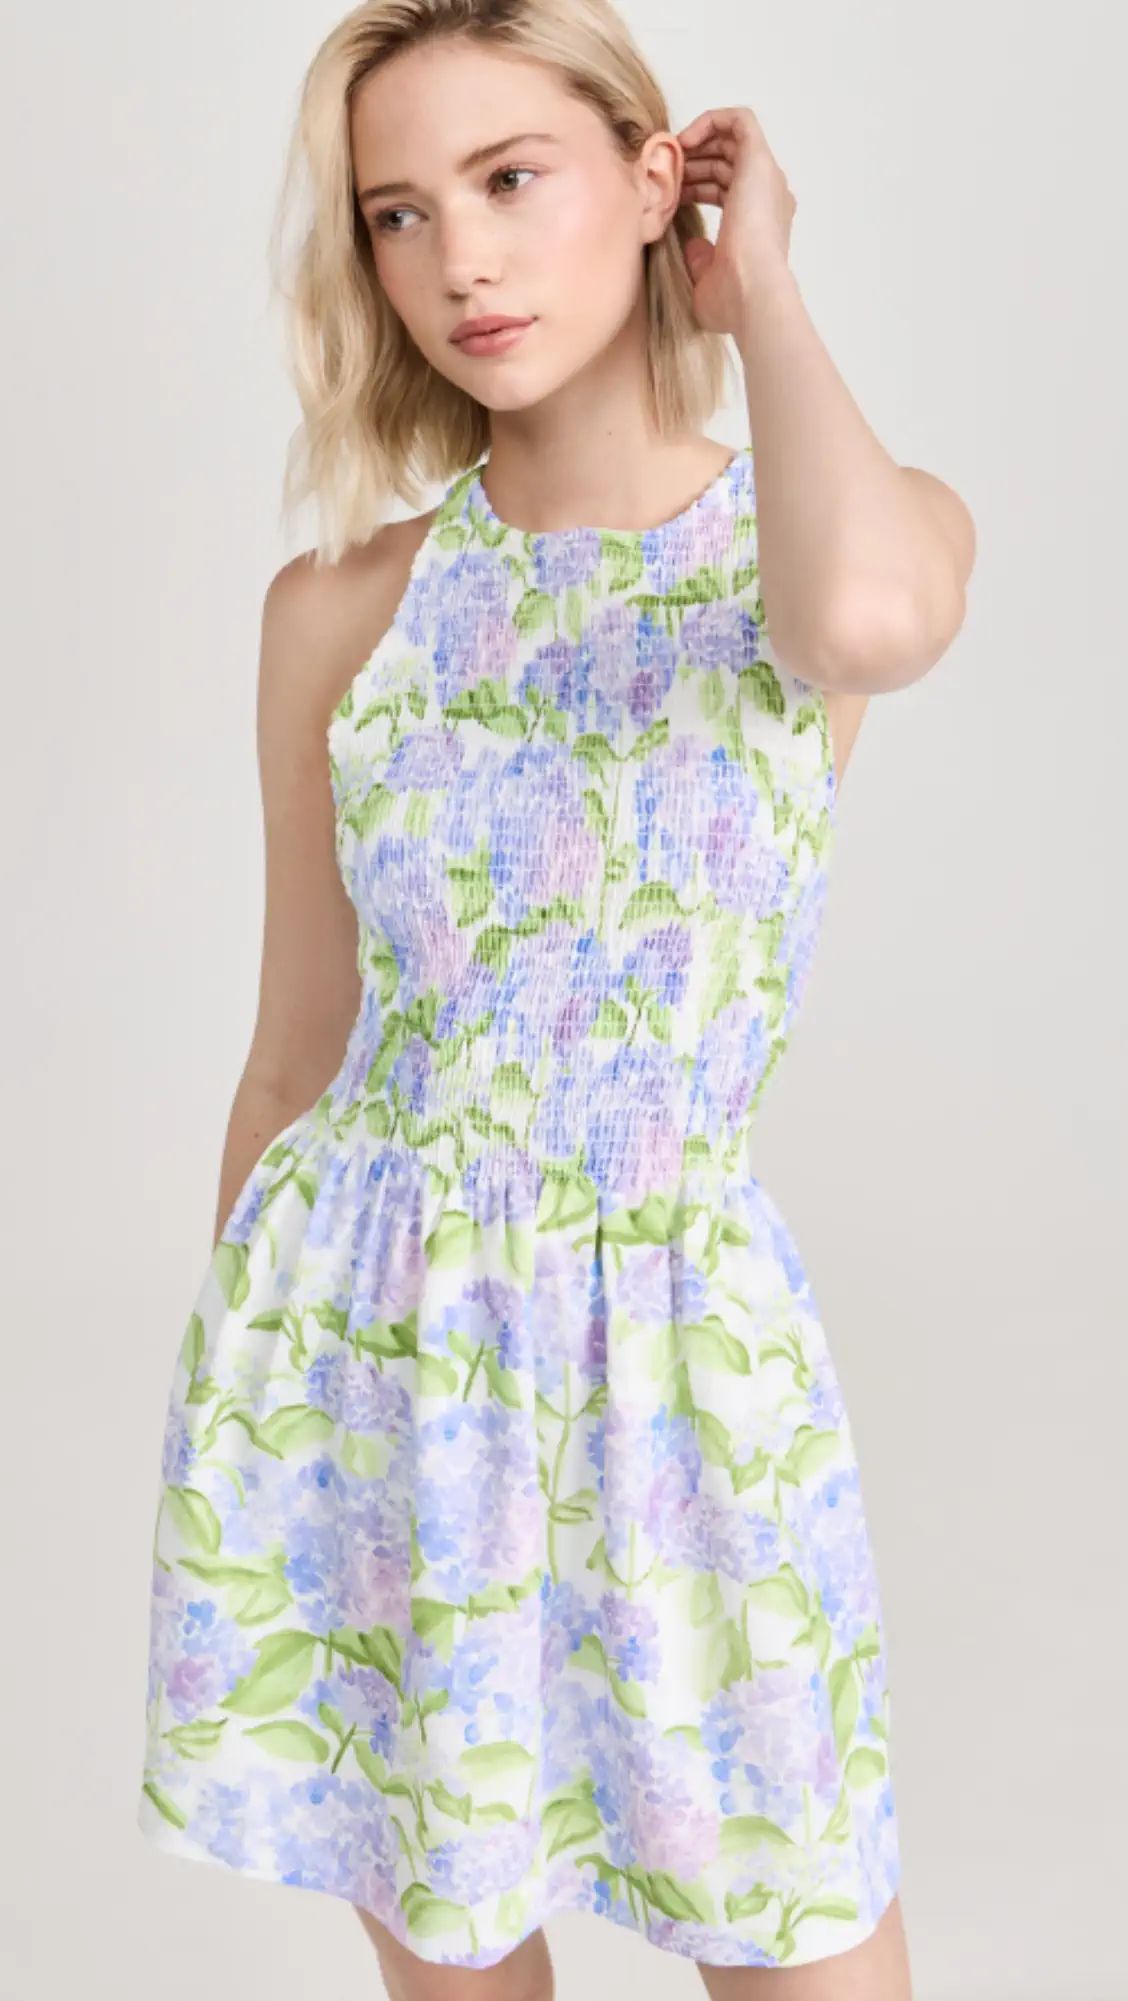 The Lilou Nap Dress | Shopbop